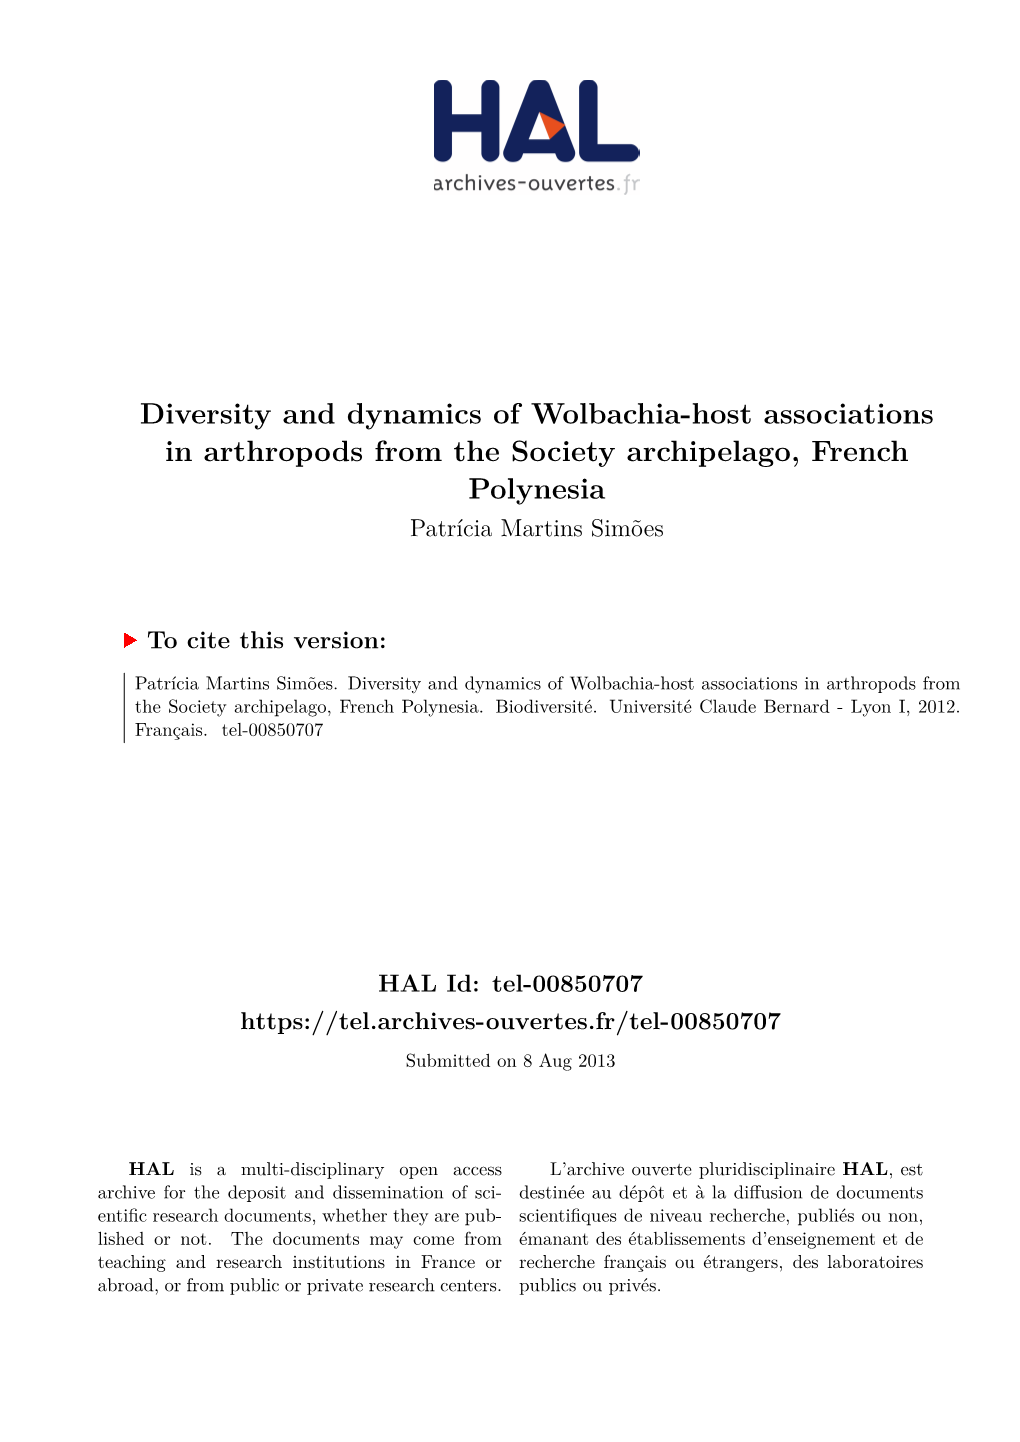 Diversity and Dynamics of Wolbachia-Host Associations in Arthropods from the Society Archipelago, French Polynesia Patrícia Martins Simões